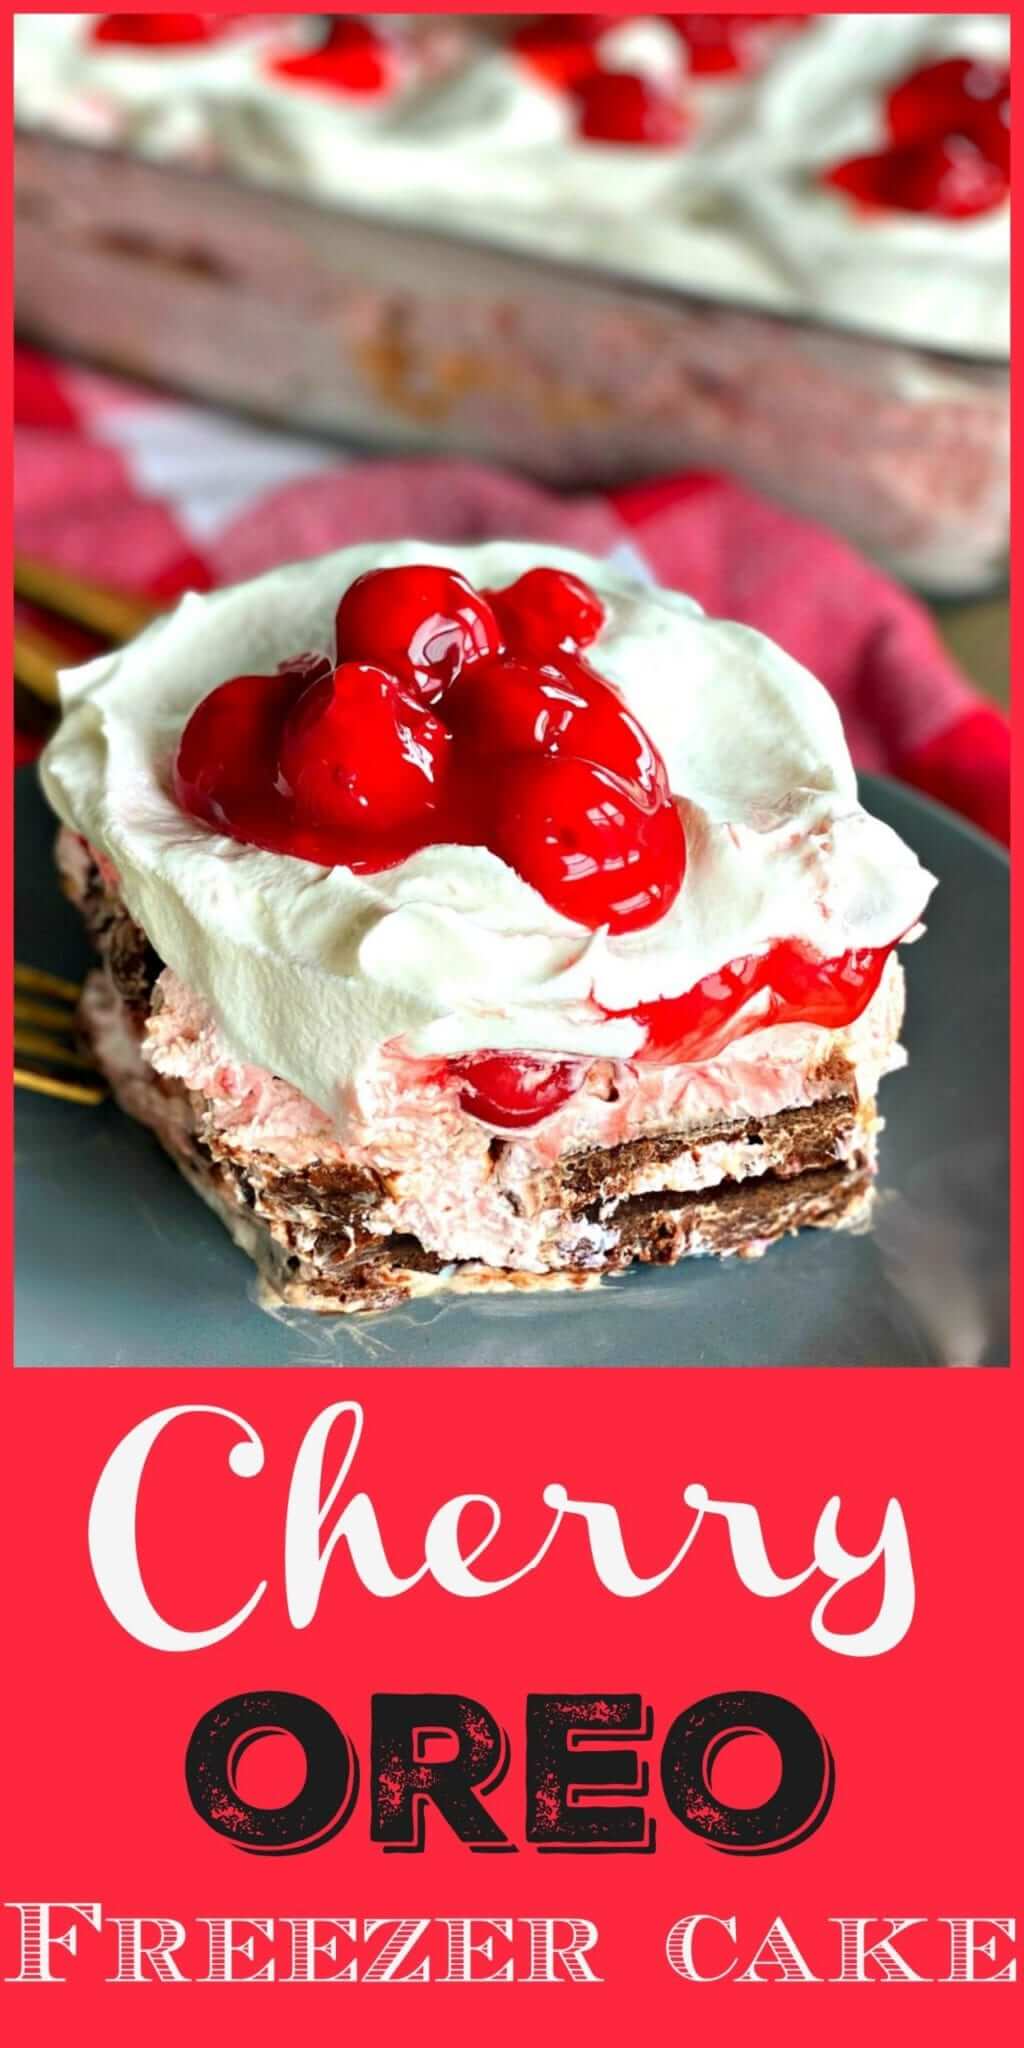 Cherry Oreo Freezer Cake